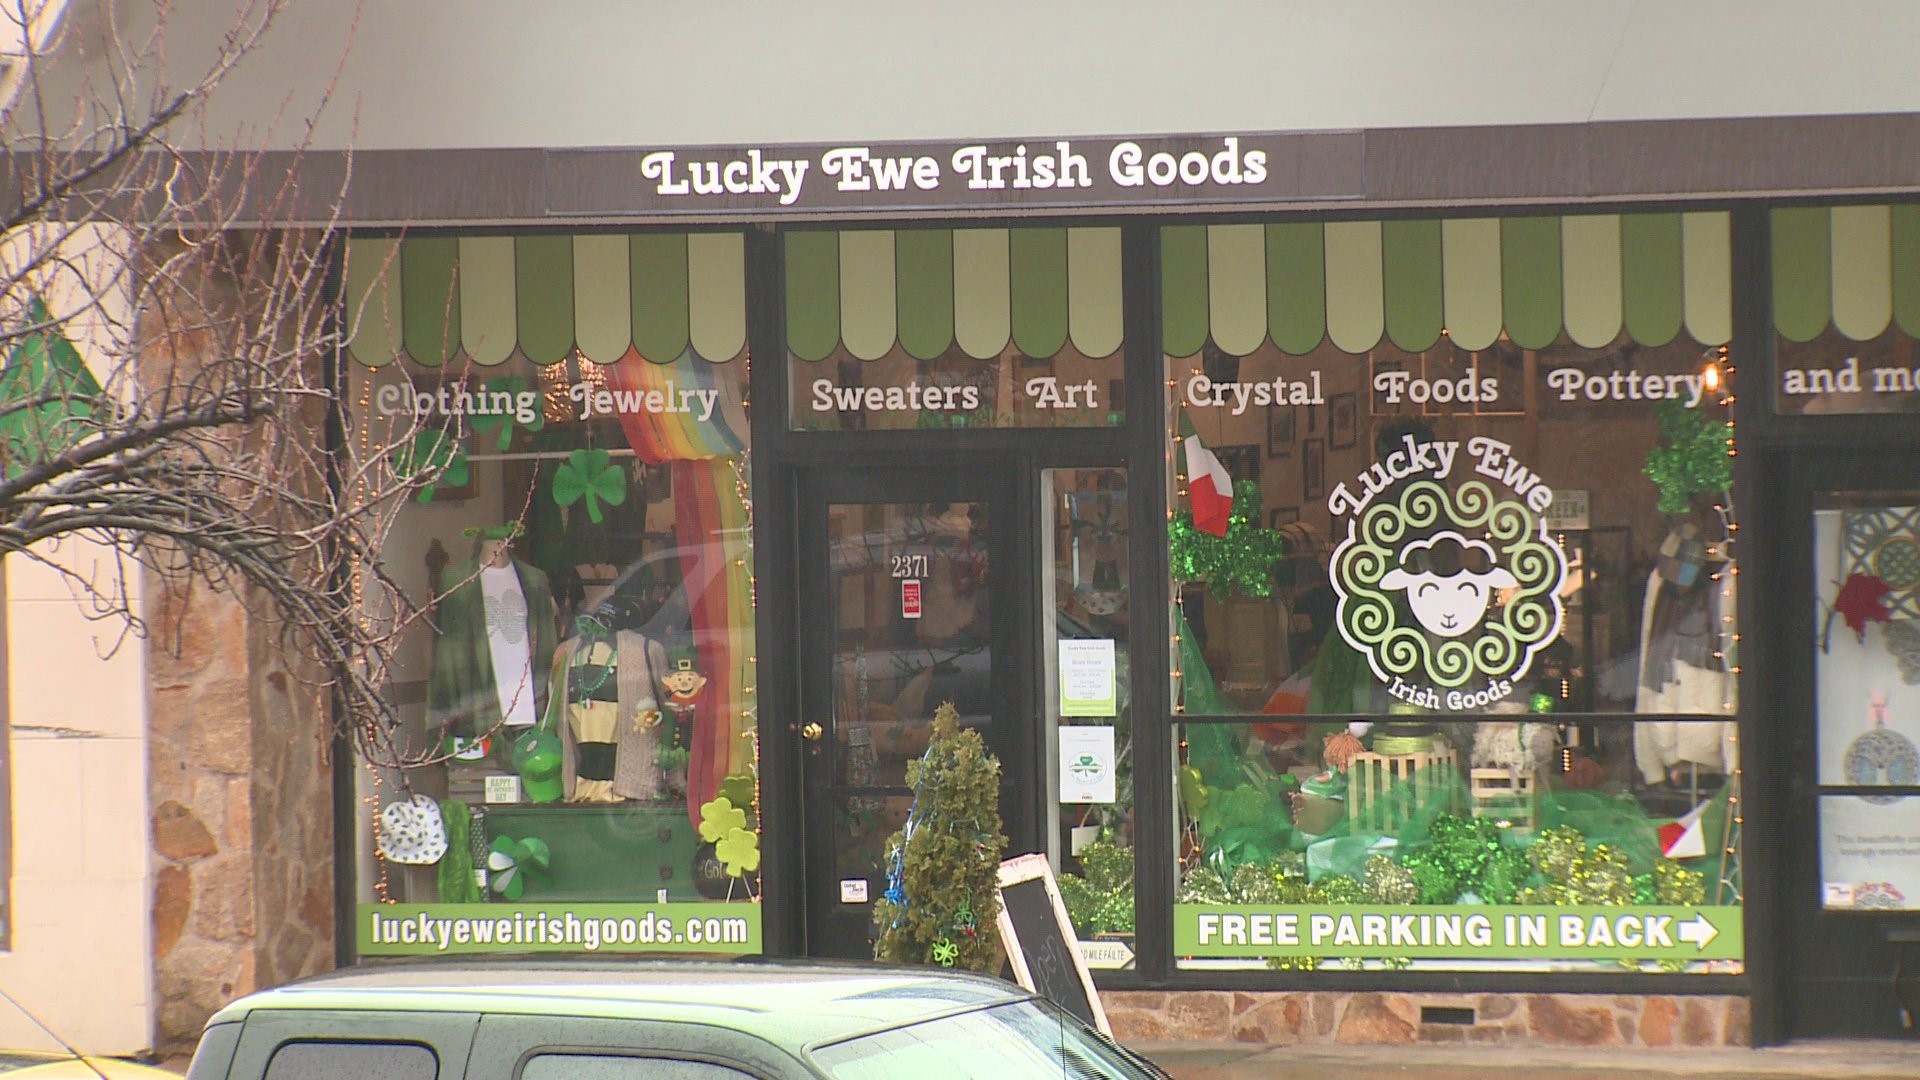 Lucky Ewe Irish Goods is working in CT